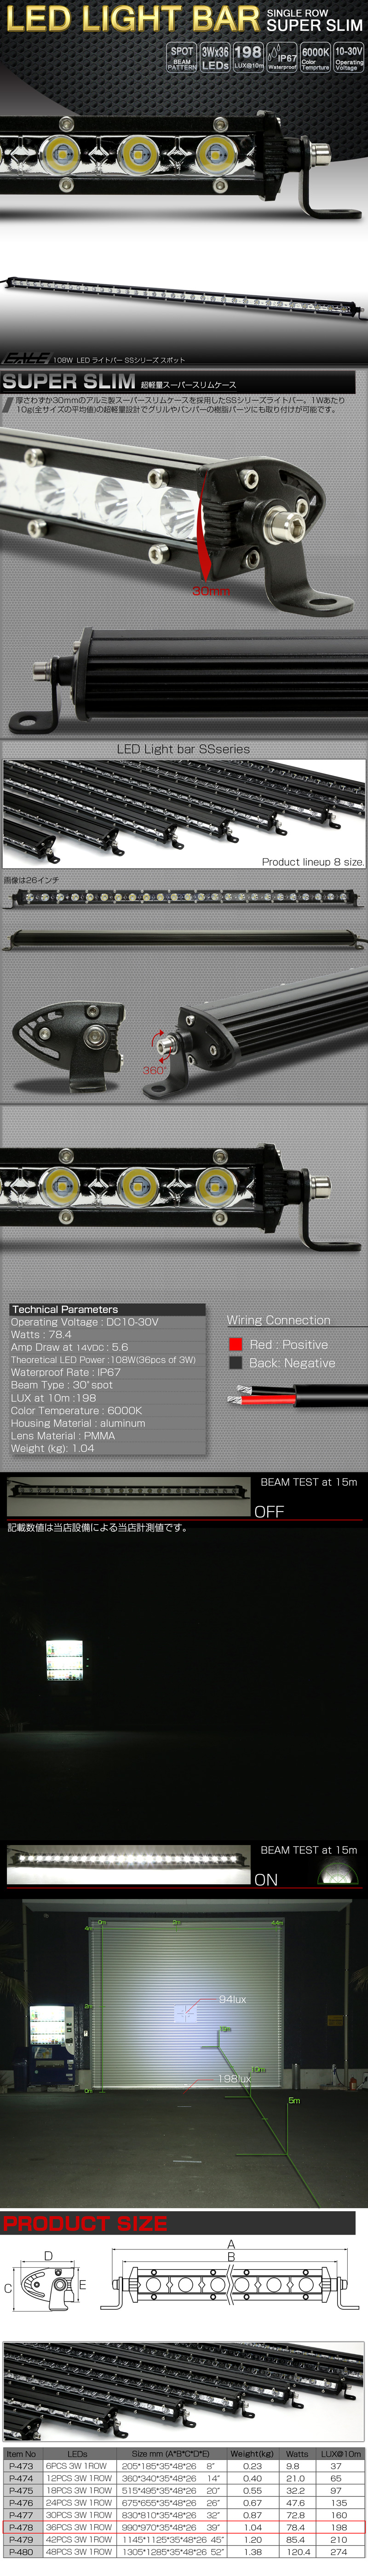 LED ライトバー 31インチ(790mm) 150W 狭角15度ハイパー スポット 12V 24V兼用 作業灯 ワークライト P-504 - 2